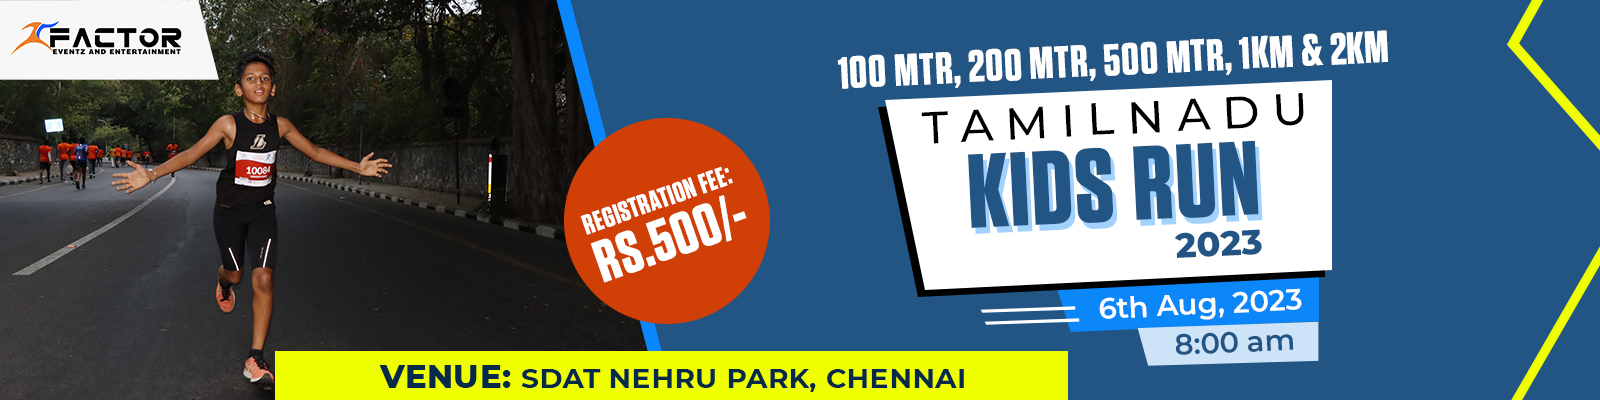 Tamil Nadu Kids Run 2023 on August 6, Register Now!